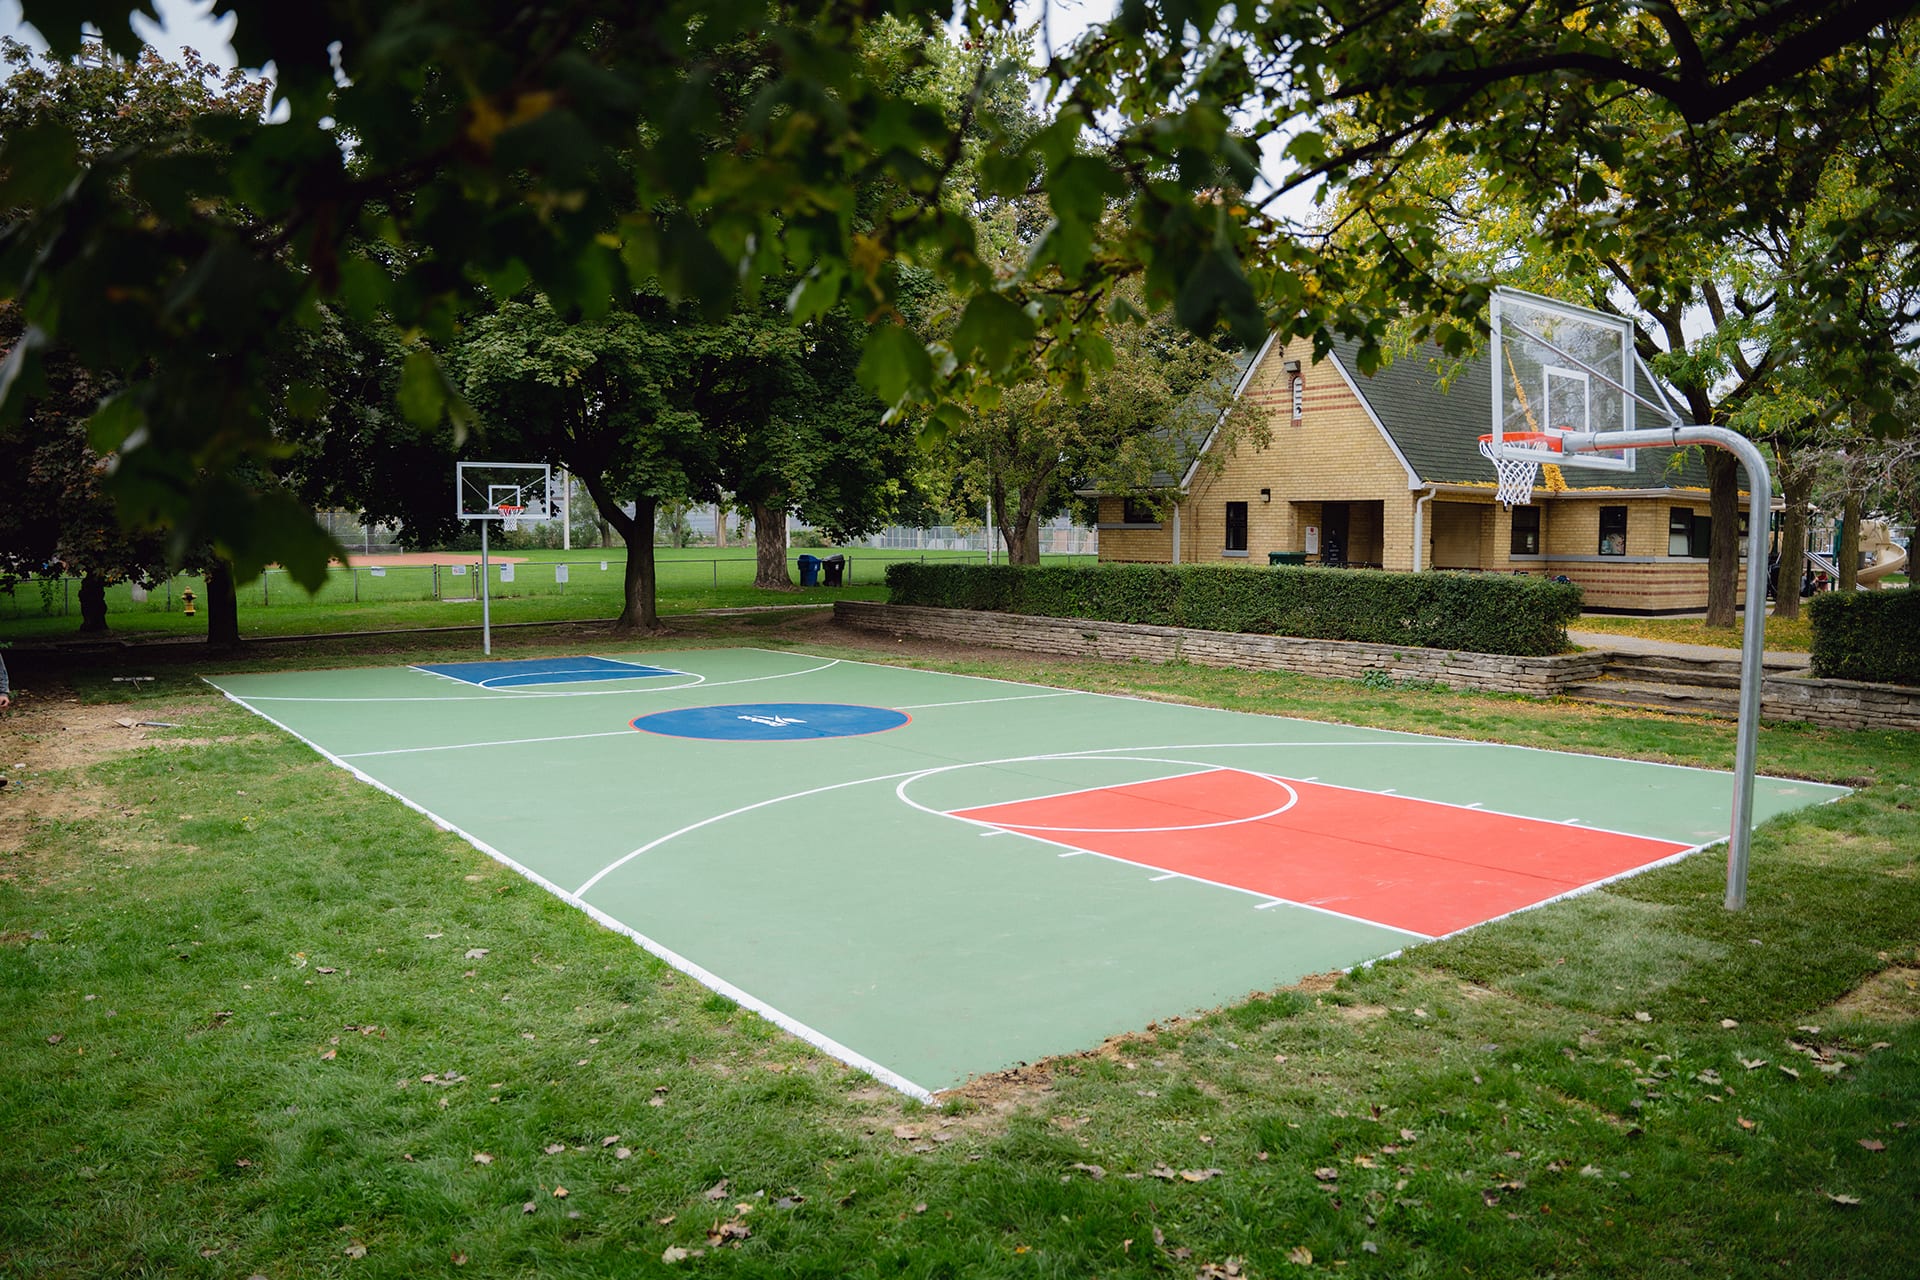 Reeboks new and improved McGregor Park basketball court.